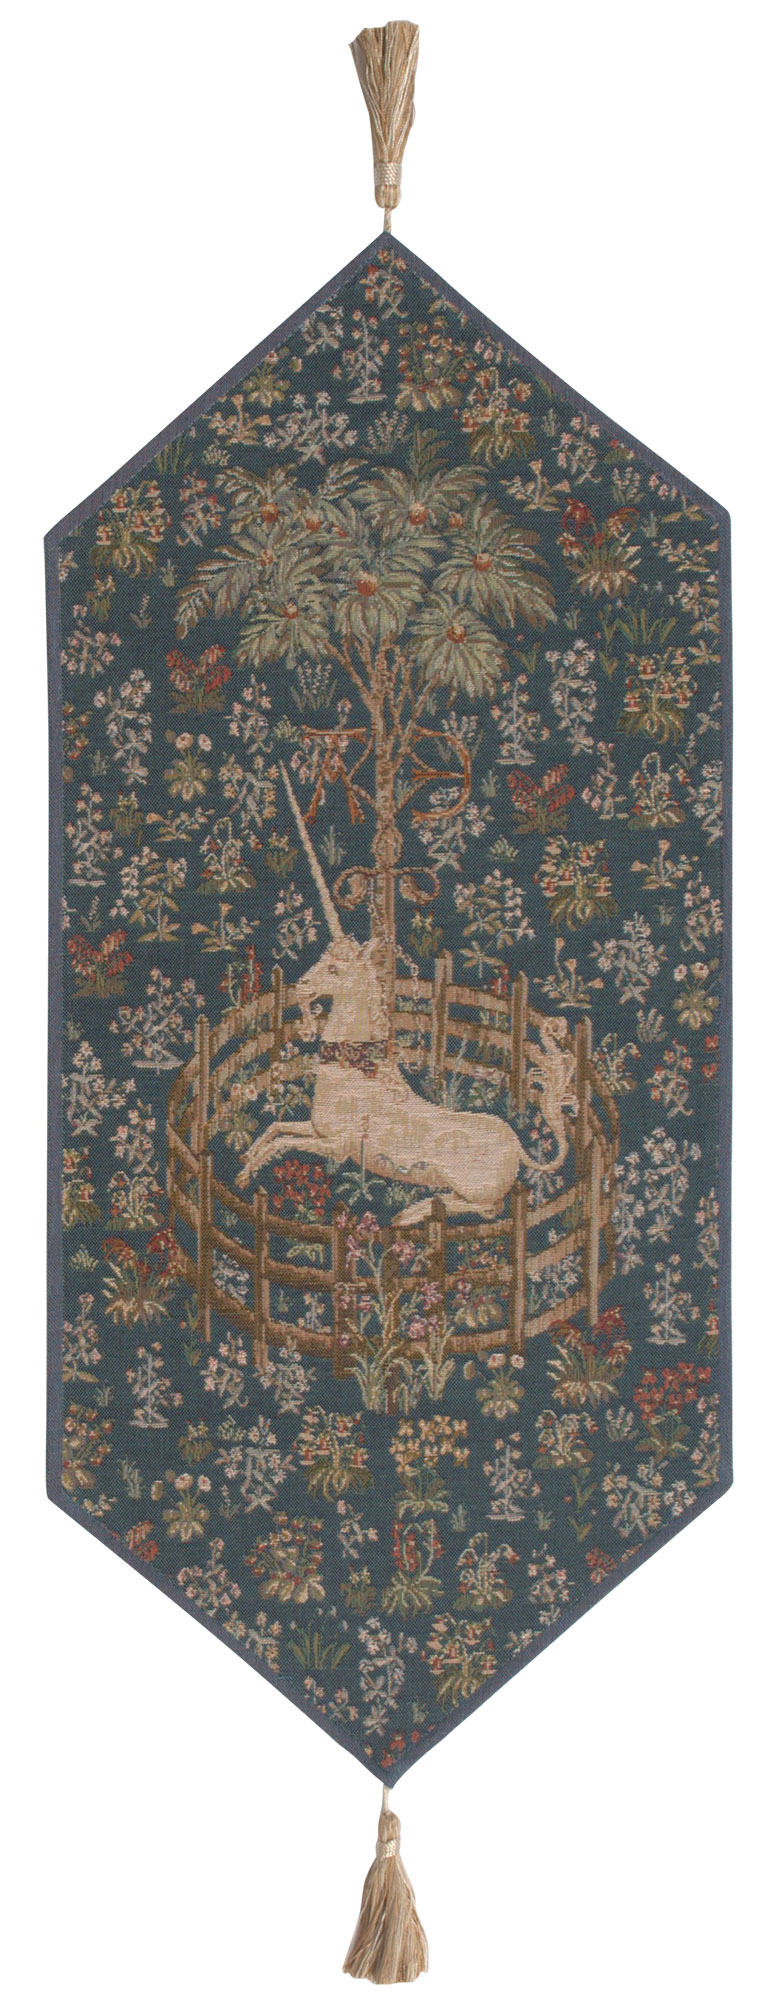 Licorne Captive Bleu Small French Tapestry Jacquard Table Runner